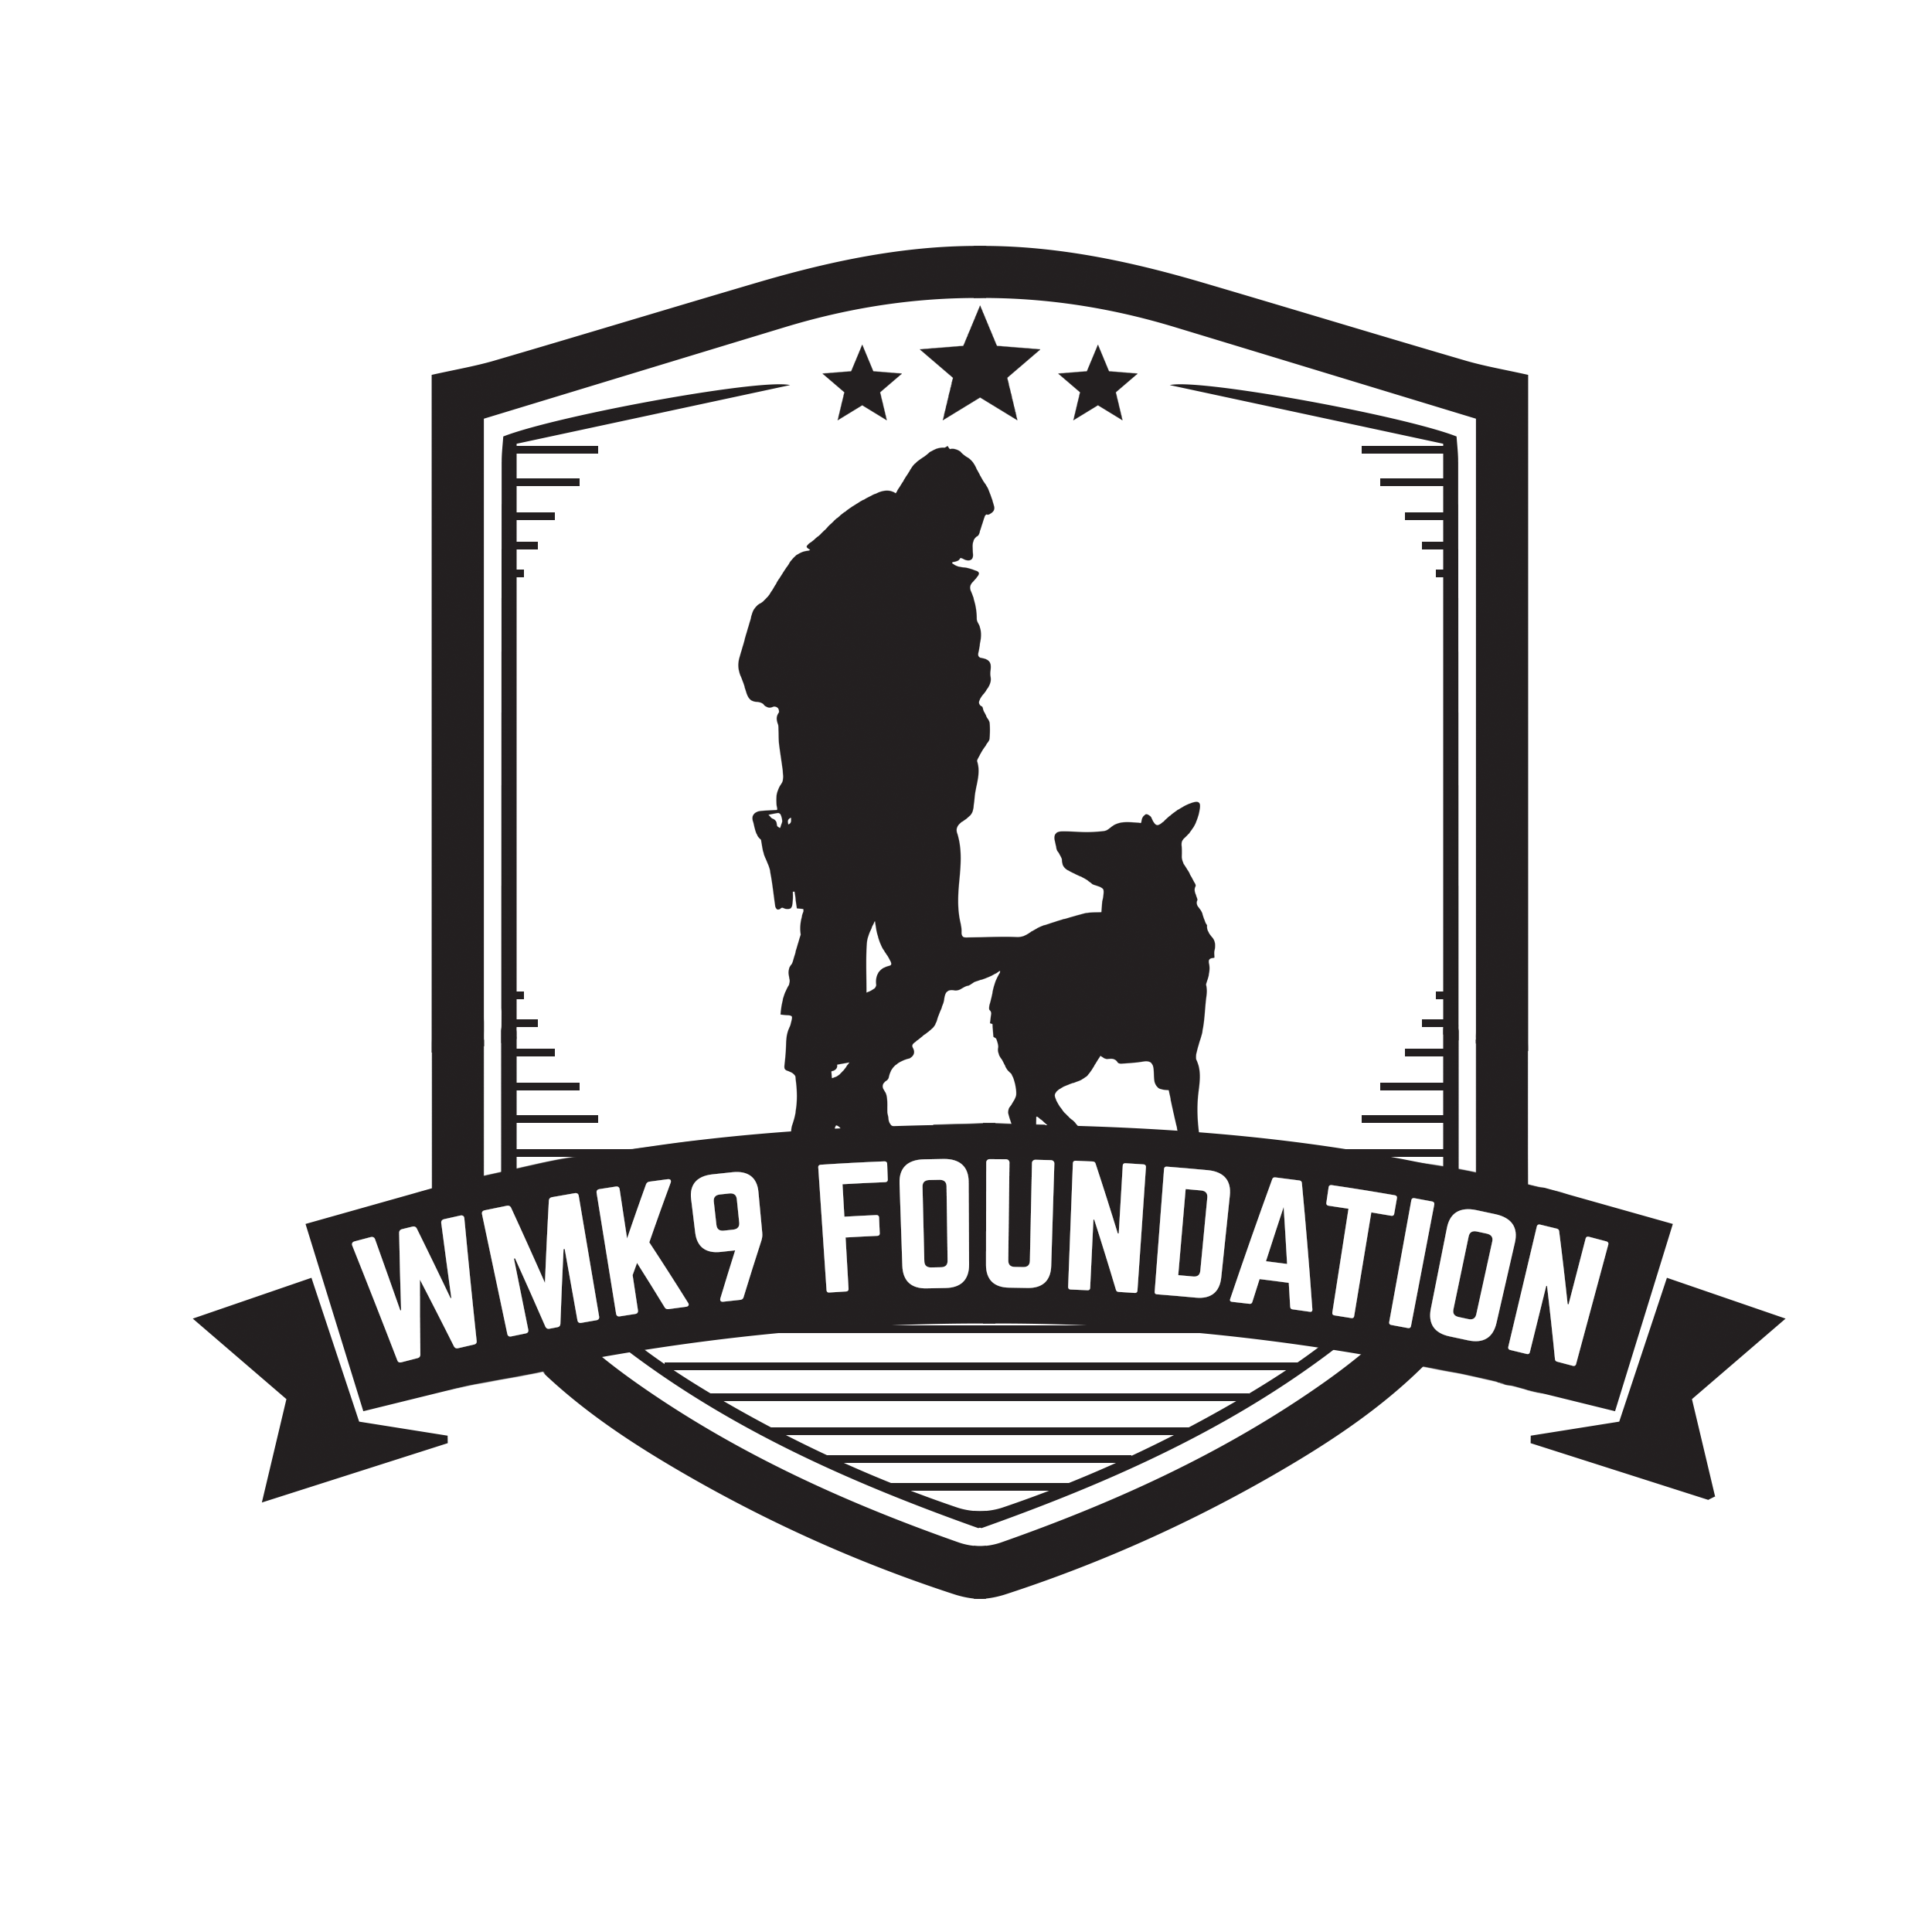 WMK9 Foundation